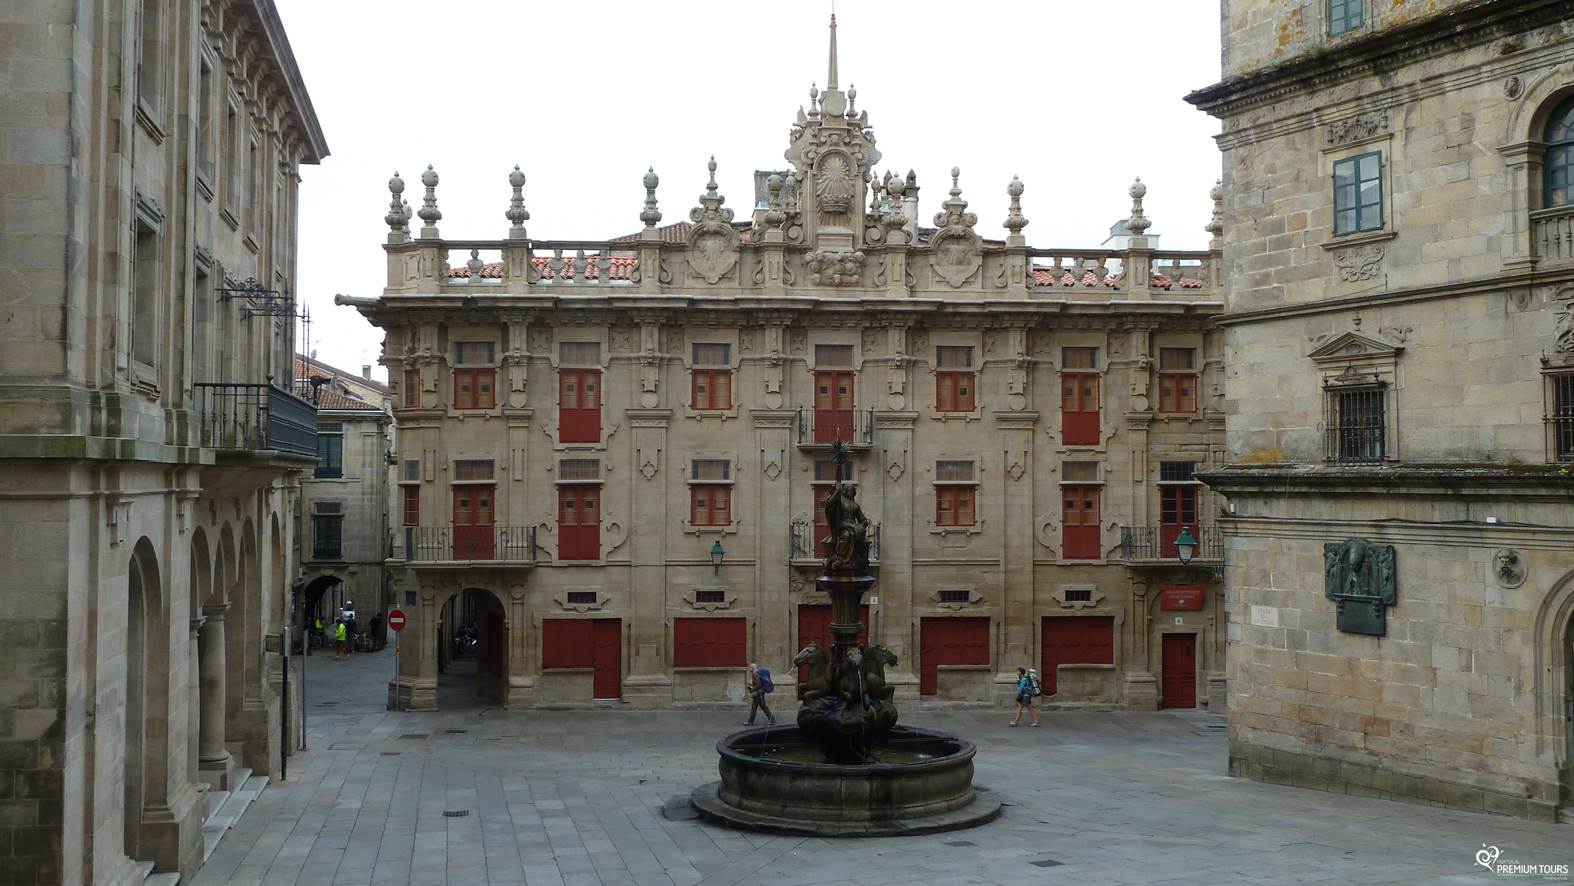 Come feel Santiago de Compostela | Portugal Premium Tours